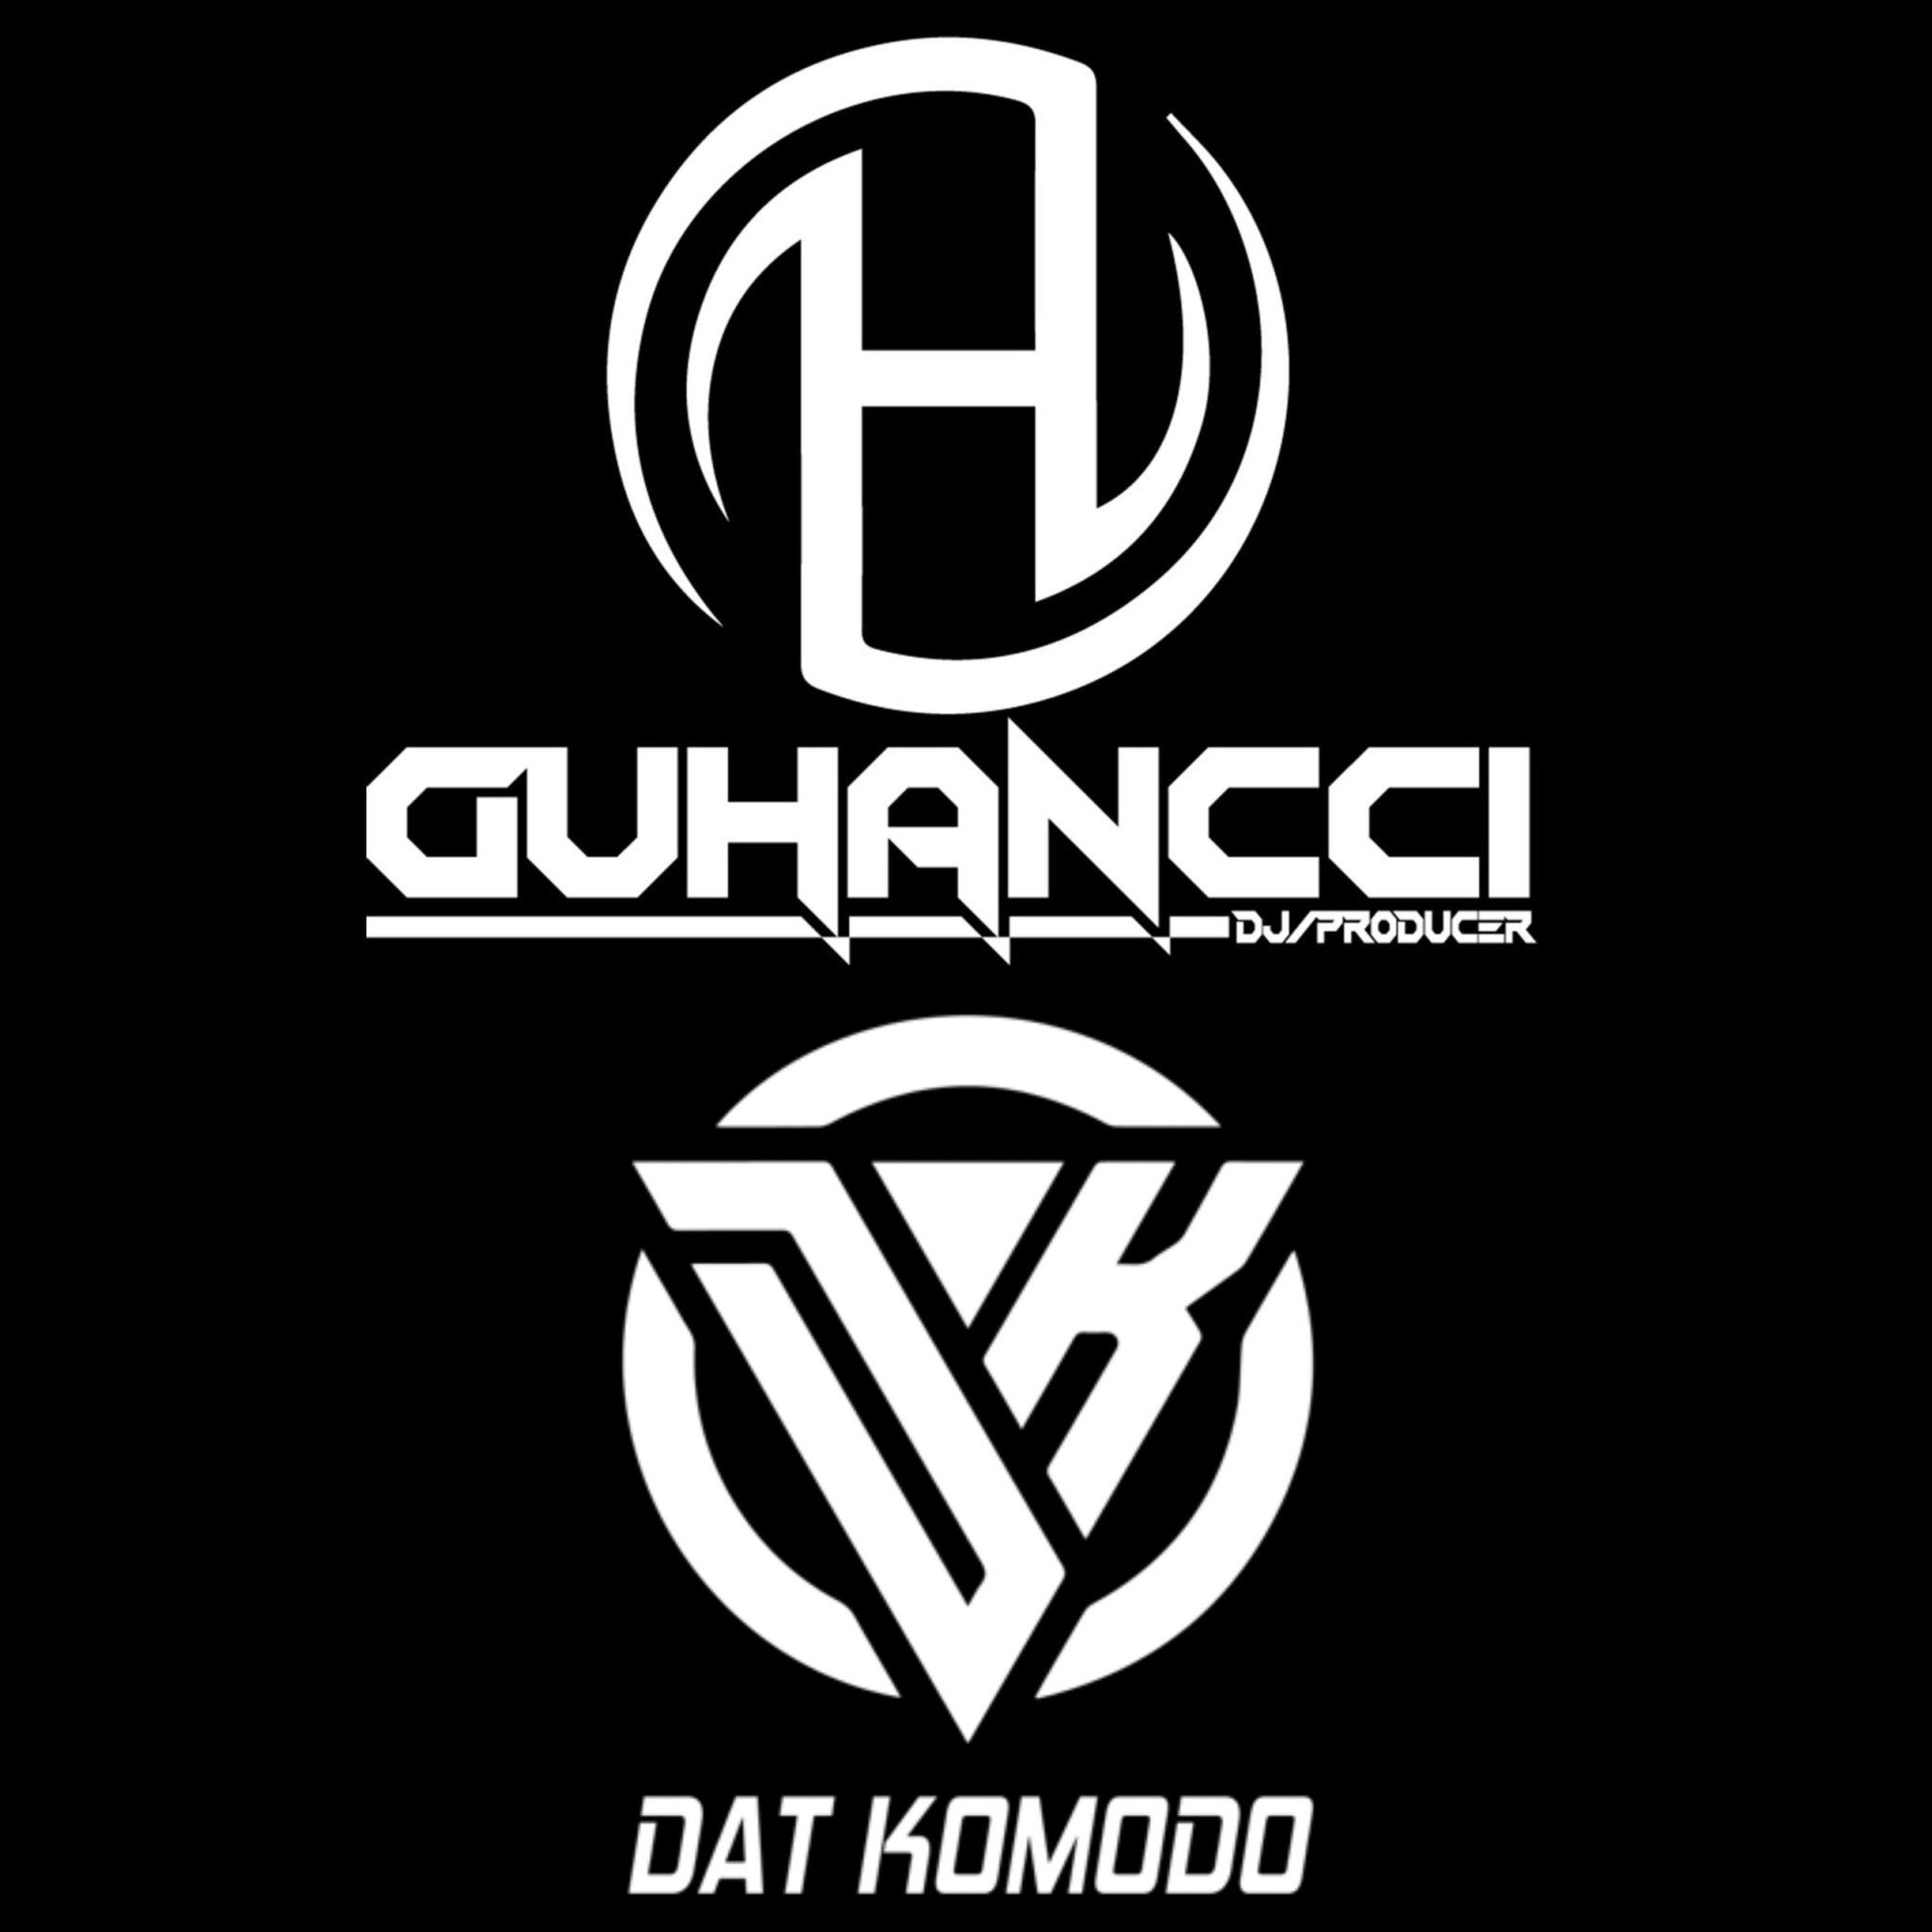 Stiahnuť ▼ Express Music - DatKomodo ft guHancci (guHancci Team)